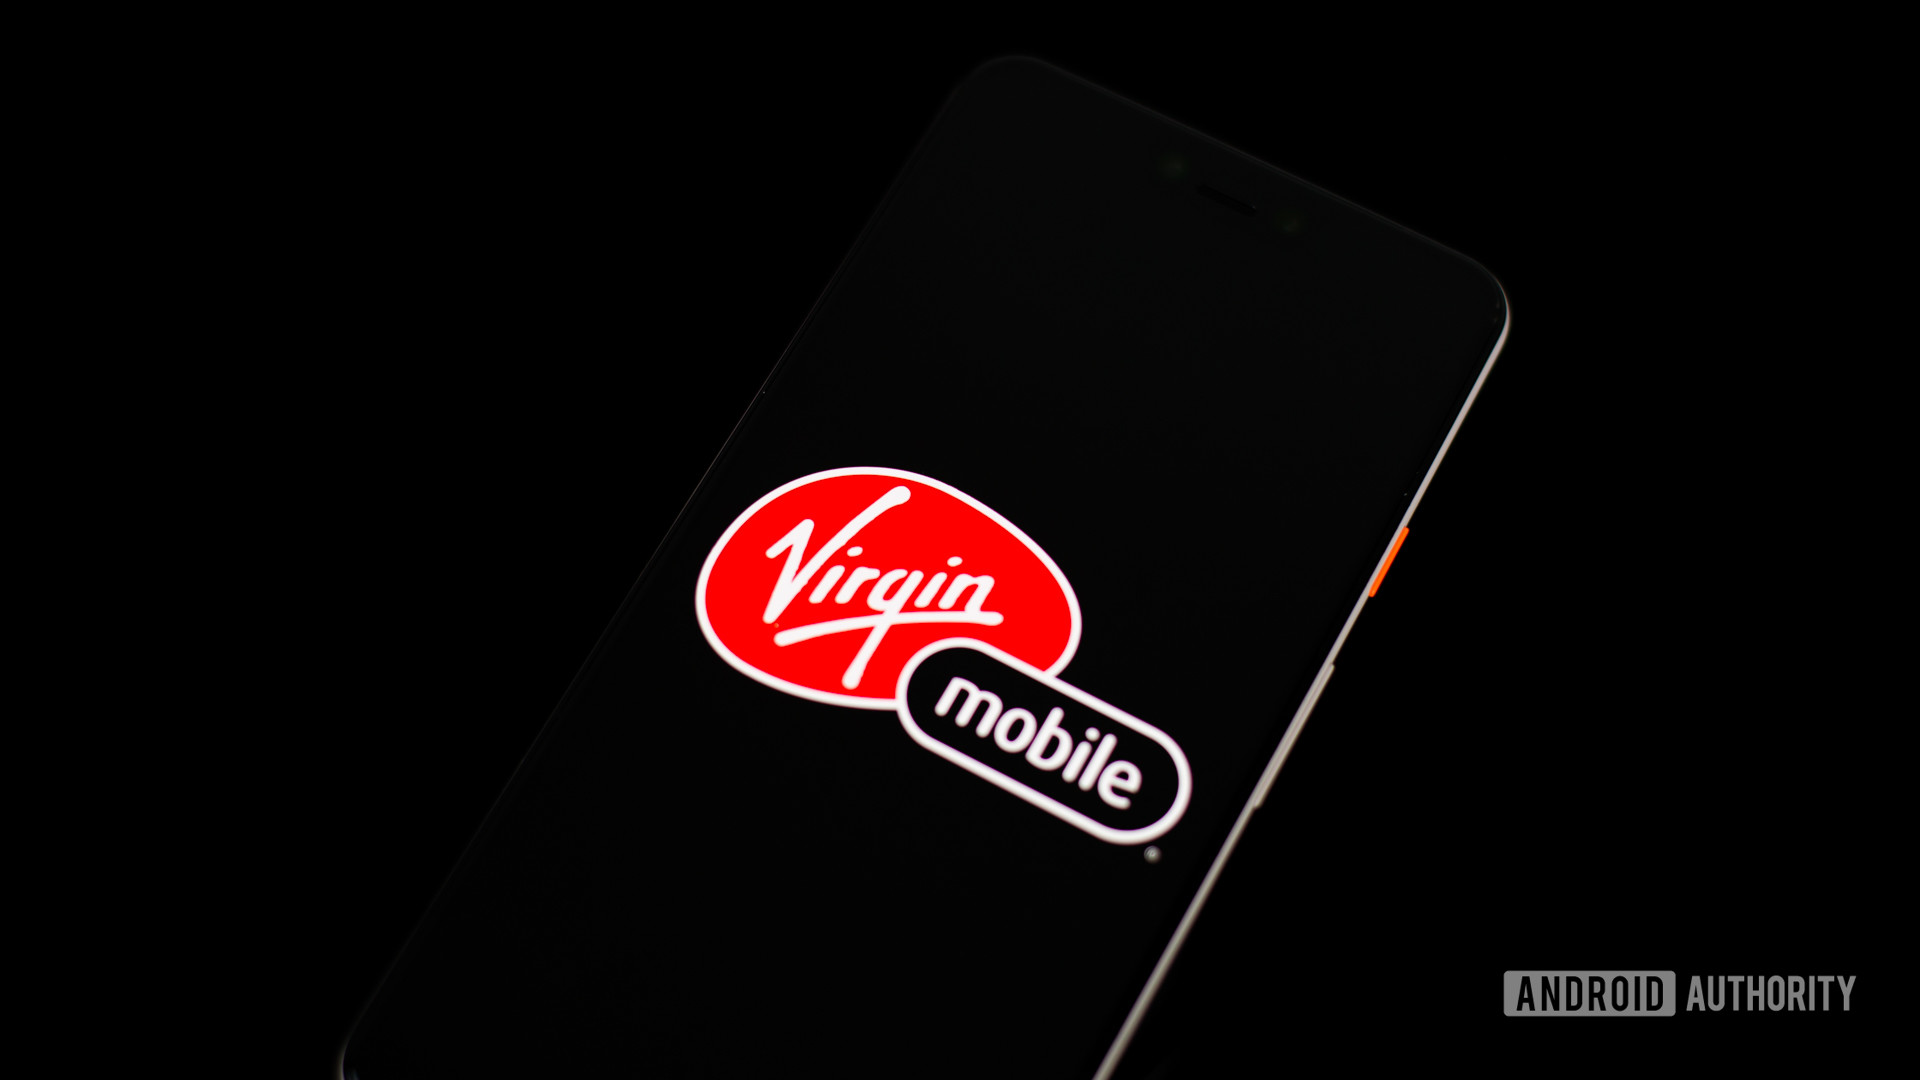 Virgin Mobile MVNO carrier logo on phone stock photo 2